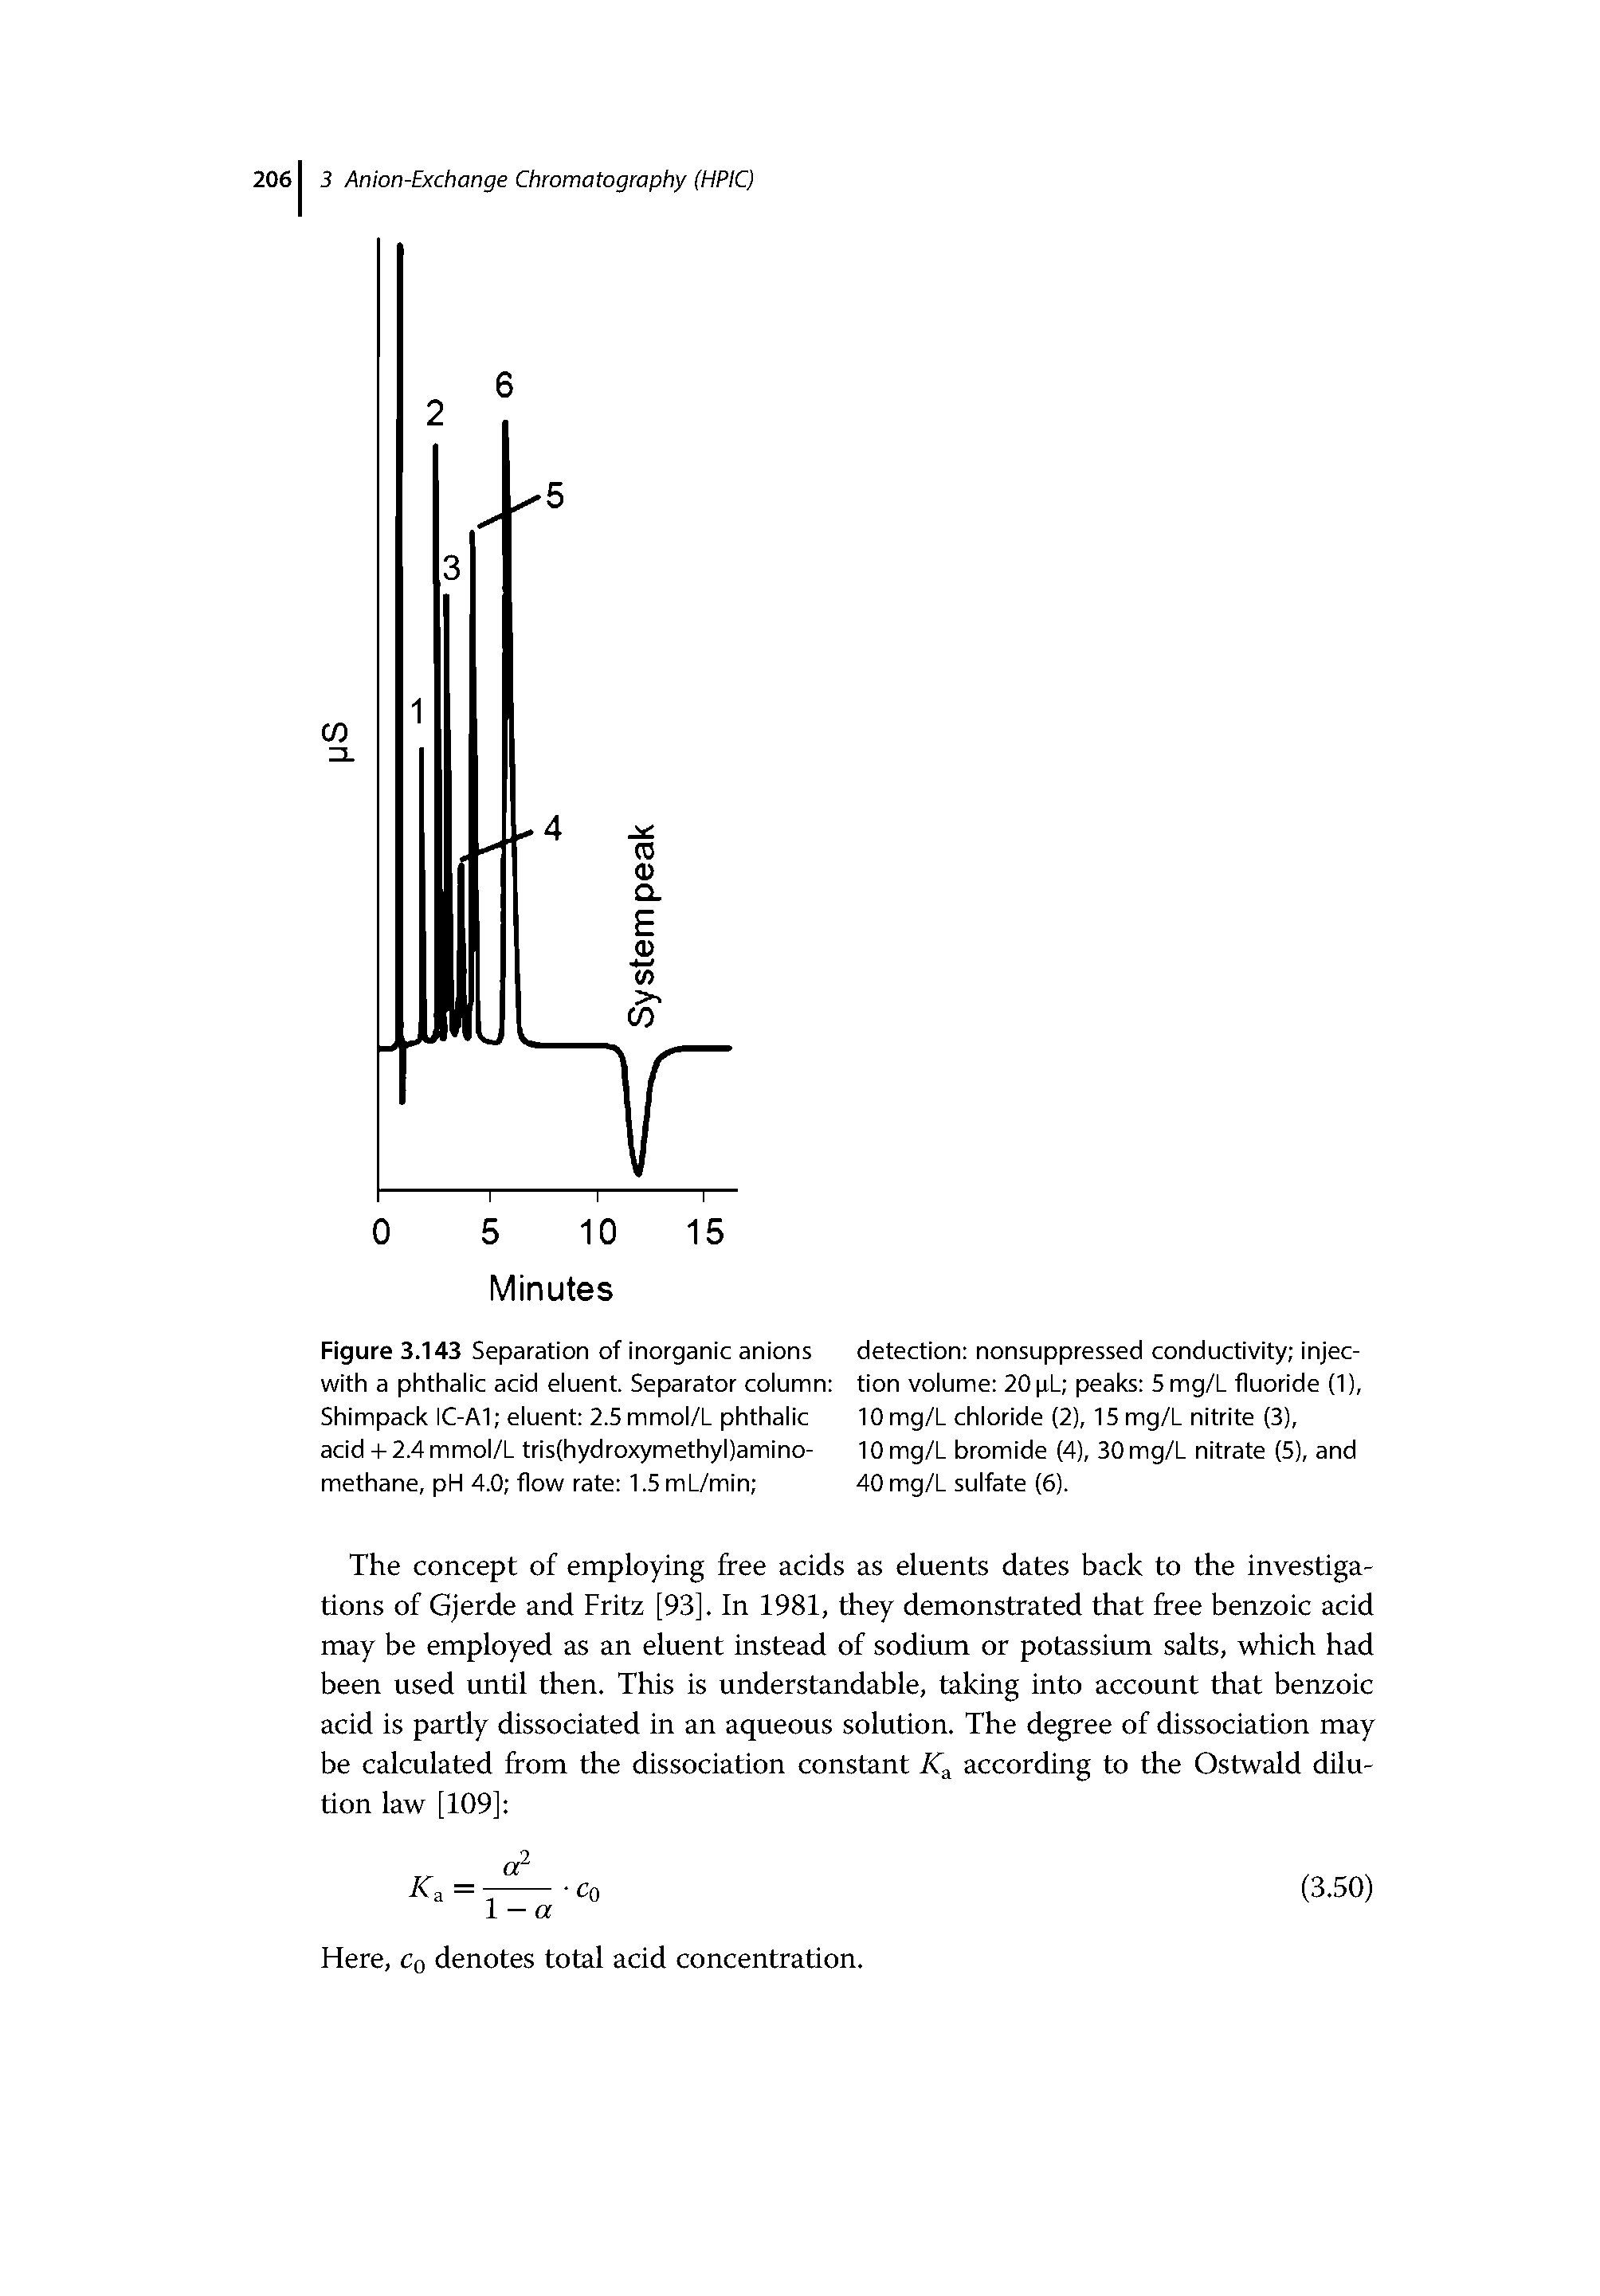 Figure 3.143 Separation of inorganic anions with a phthalic acid eluent. Separator column Shimpack IC-A1 eluent 2.5mmol/L phthalic acid + 2.4 mmol/L tris(hydroxymethyl)amino-methane, pH 4.0 flow rate I.SmL/min ...